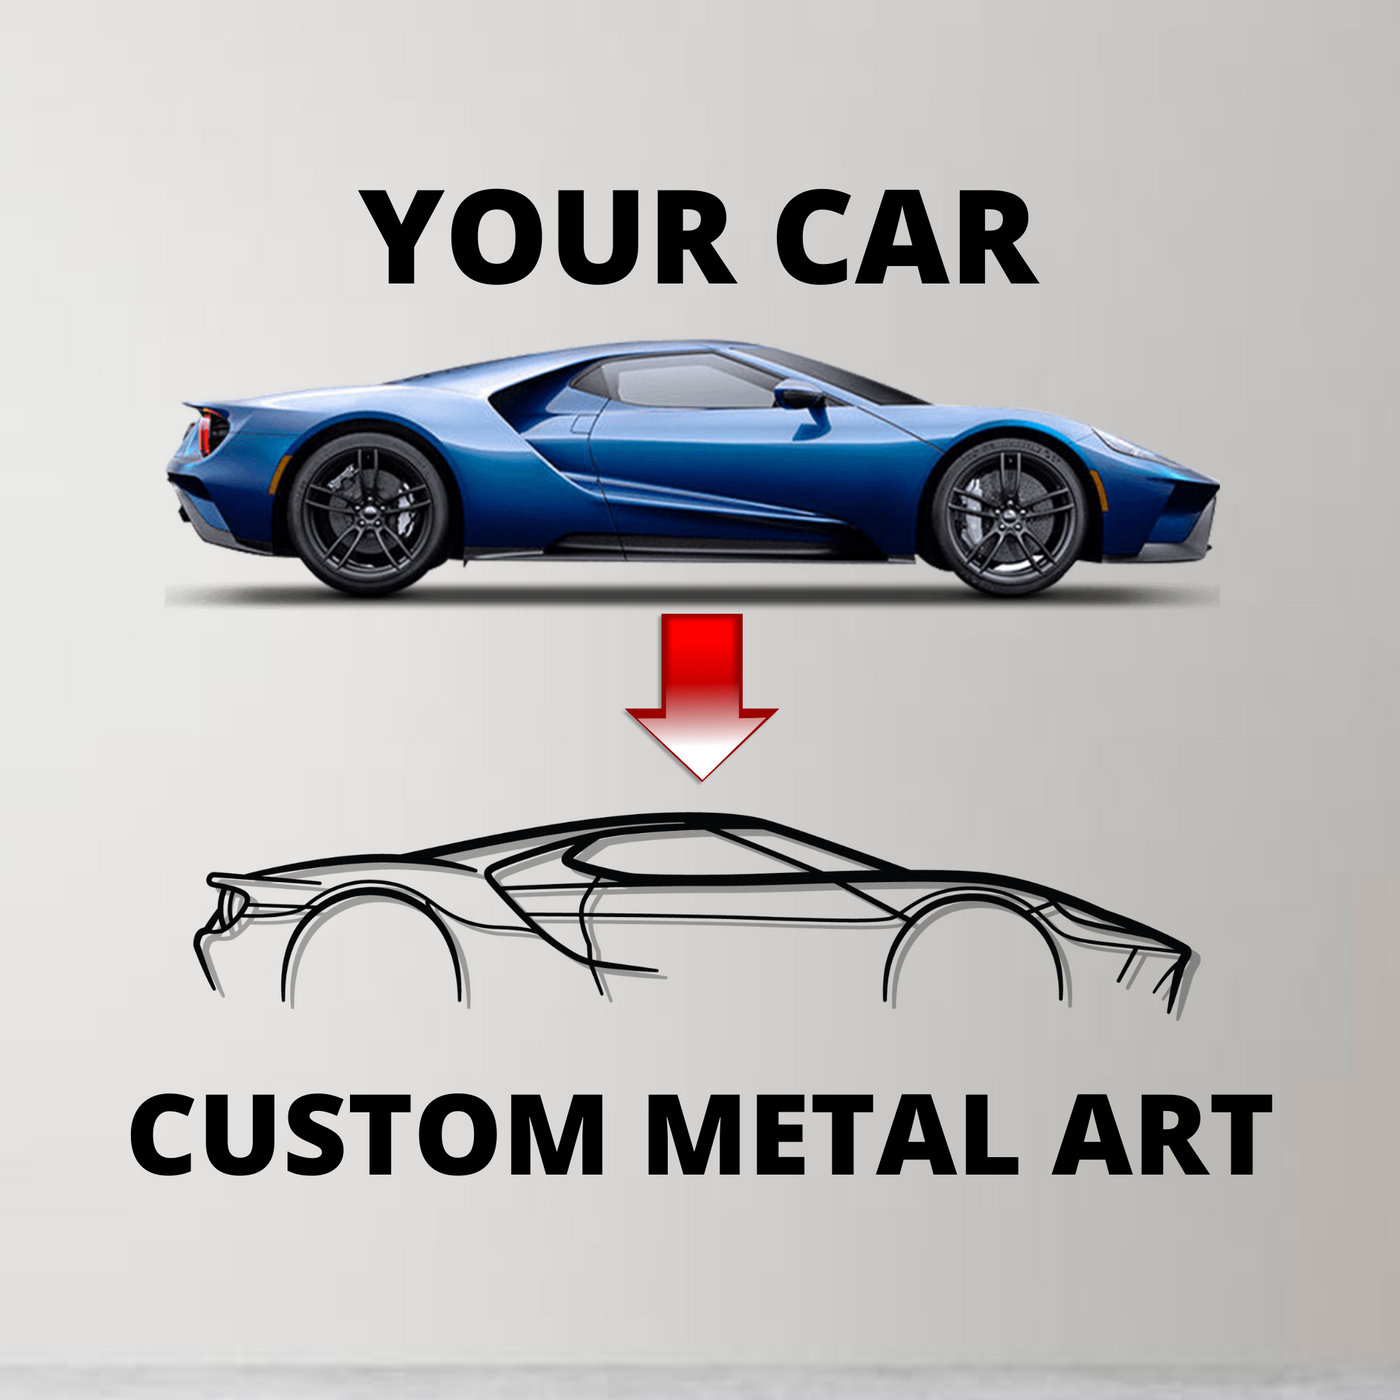 5 GT Turbo Detailed Silhouette Metal Wall Art